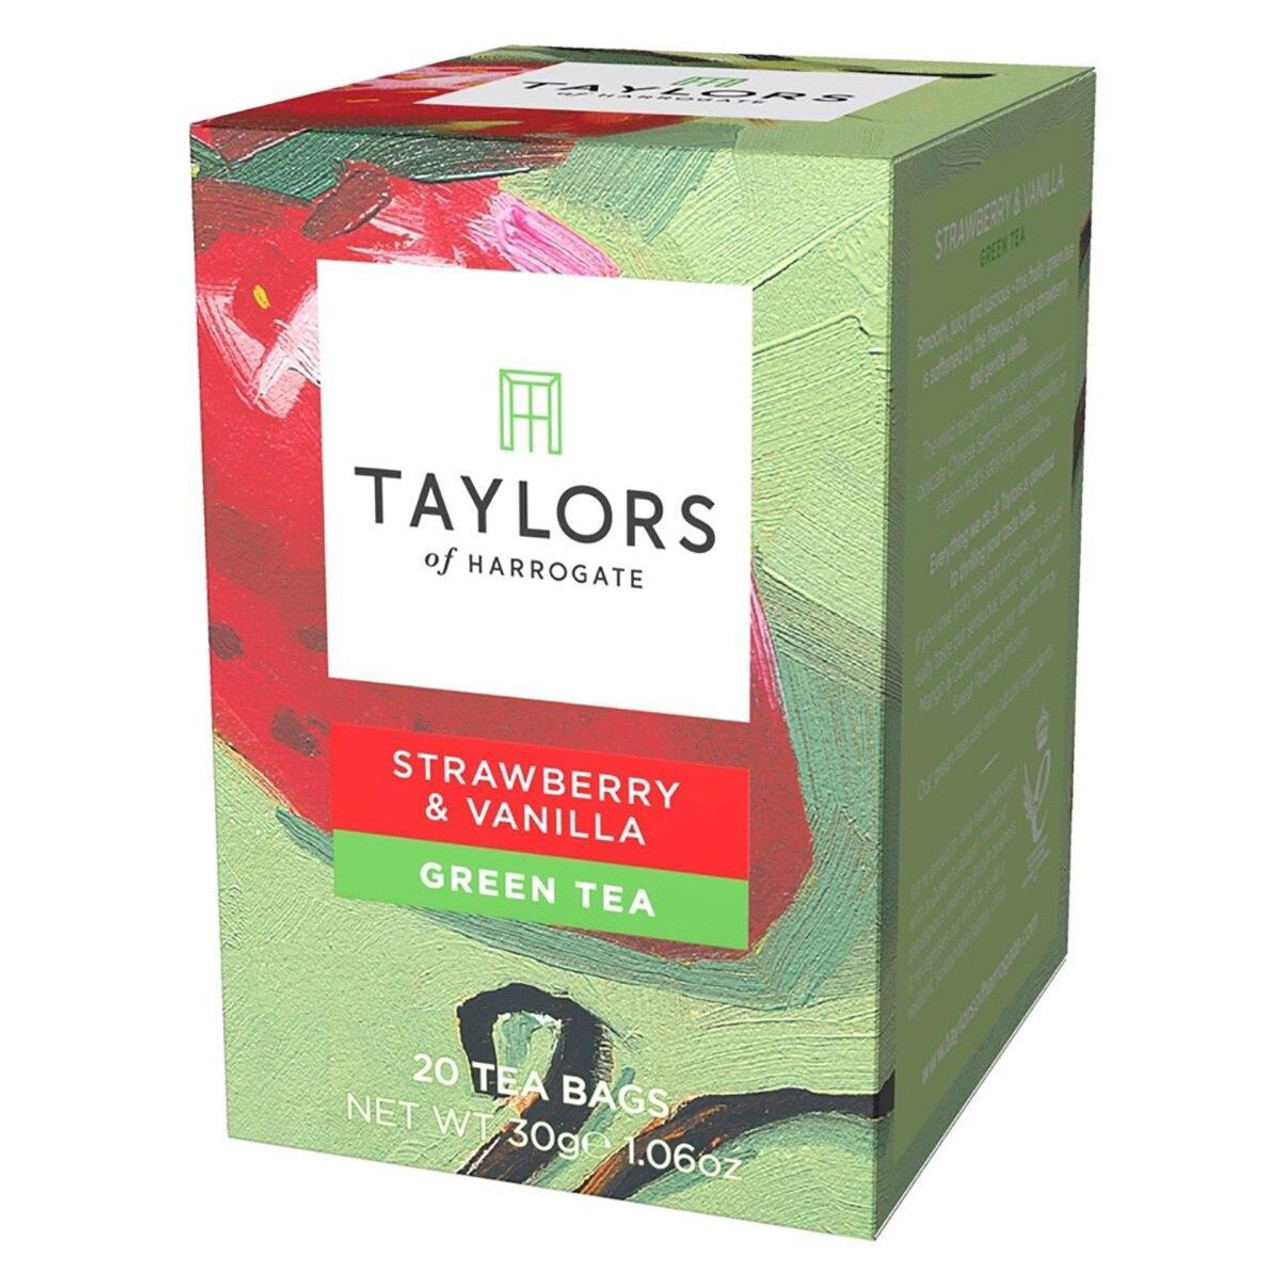 Taylors of Harrogate - Strawberry & Vanilla Green Tea - 20 Wrapped Tea Bags